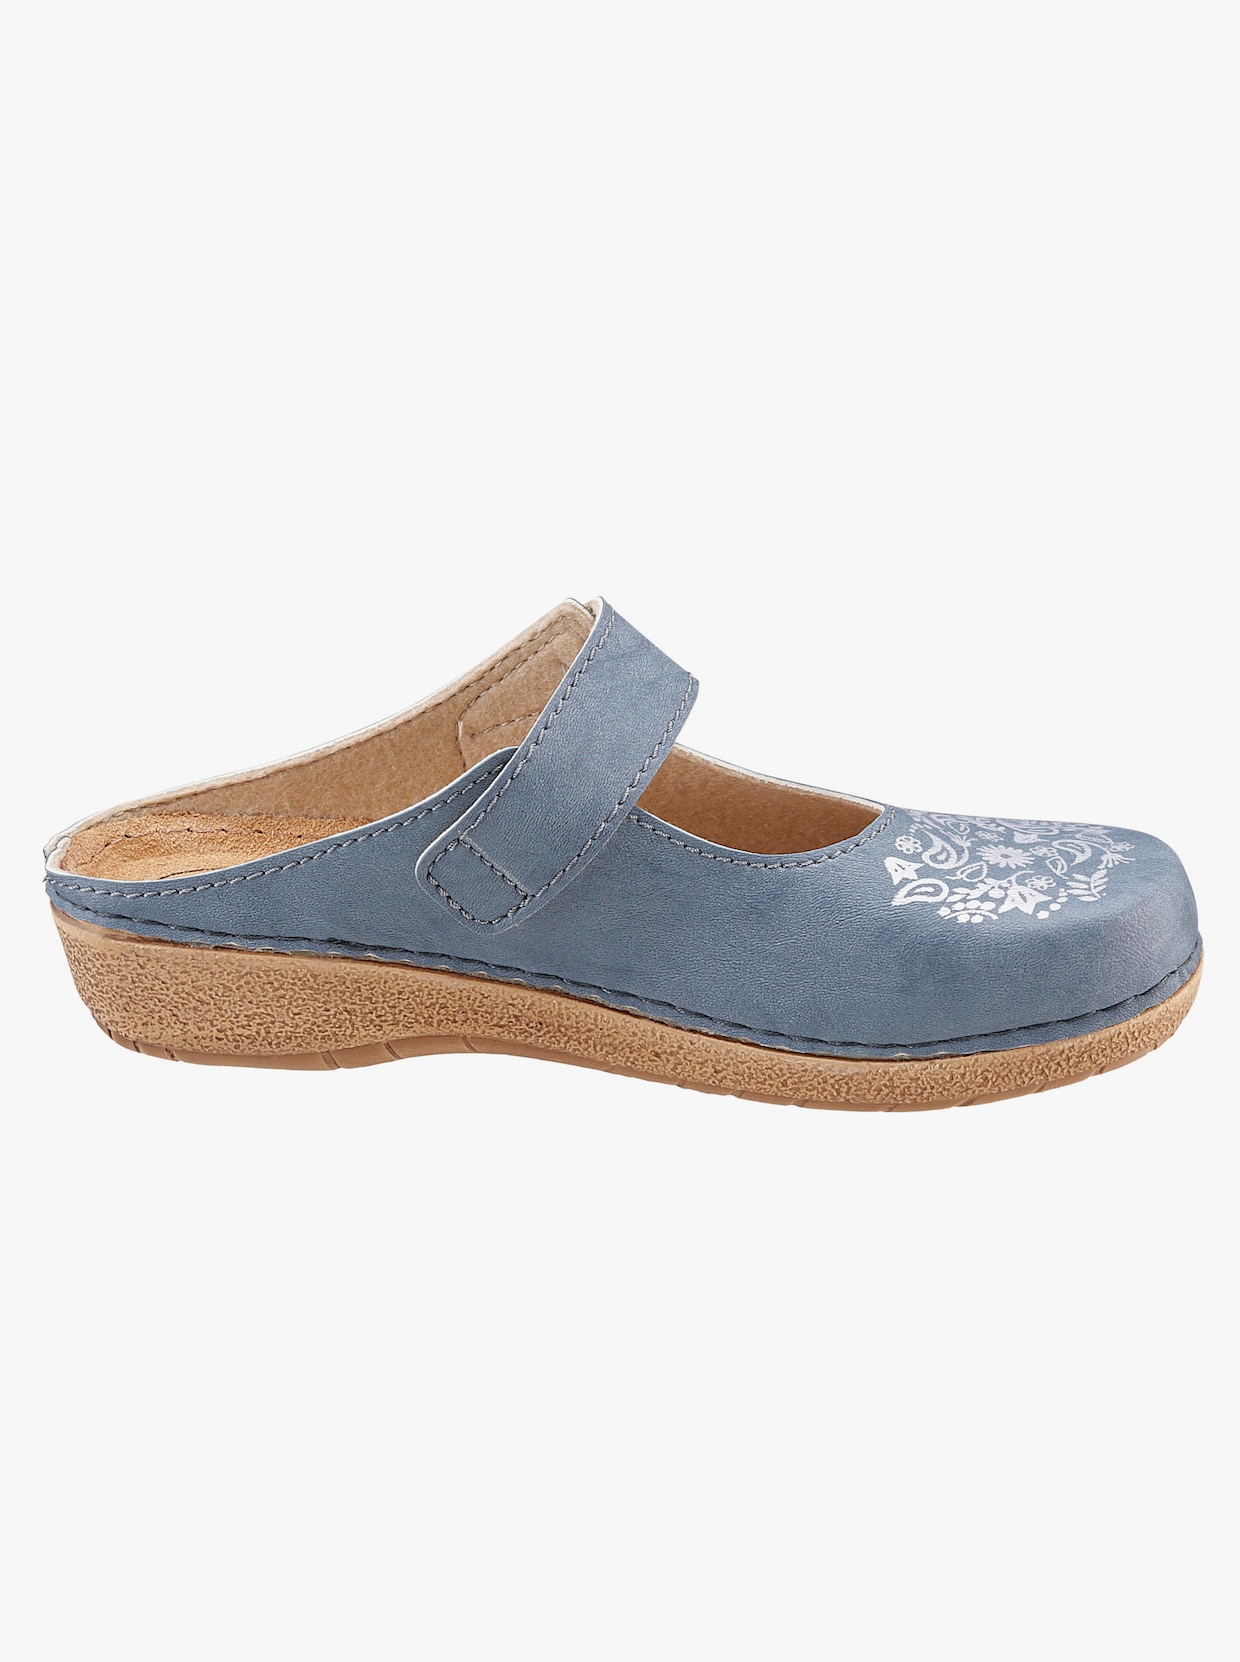 Franken Schuhe Clogs - jeansblau